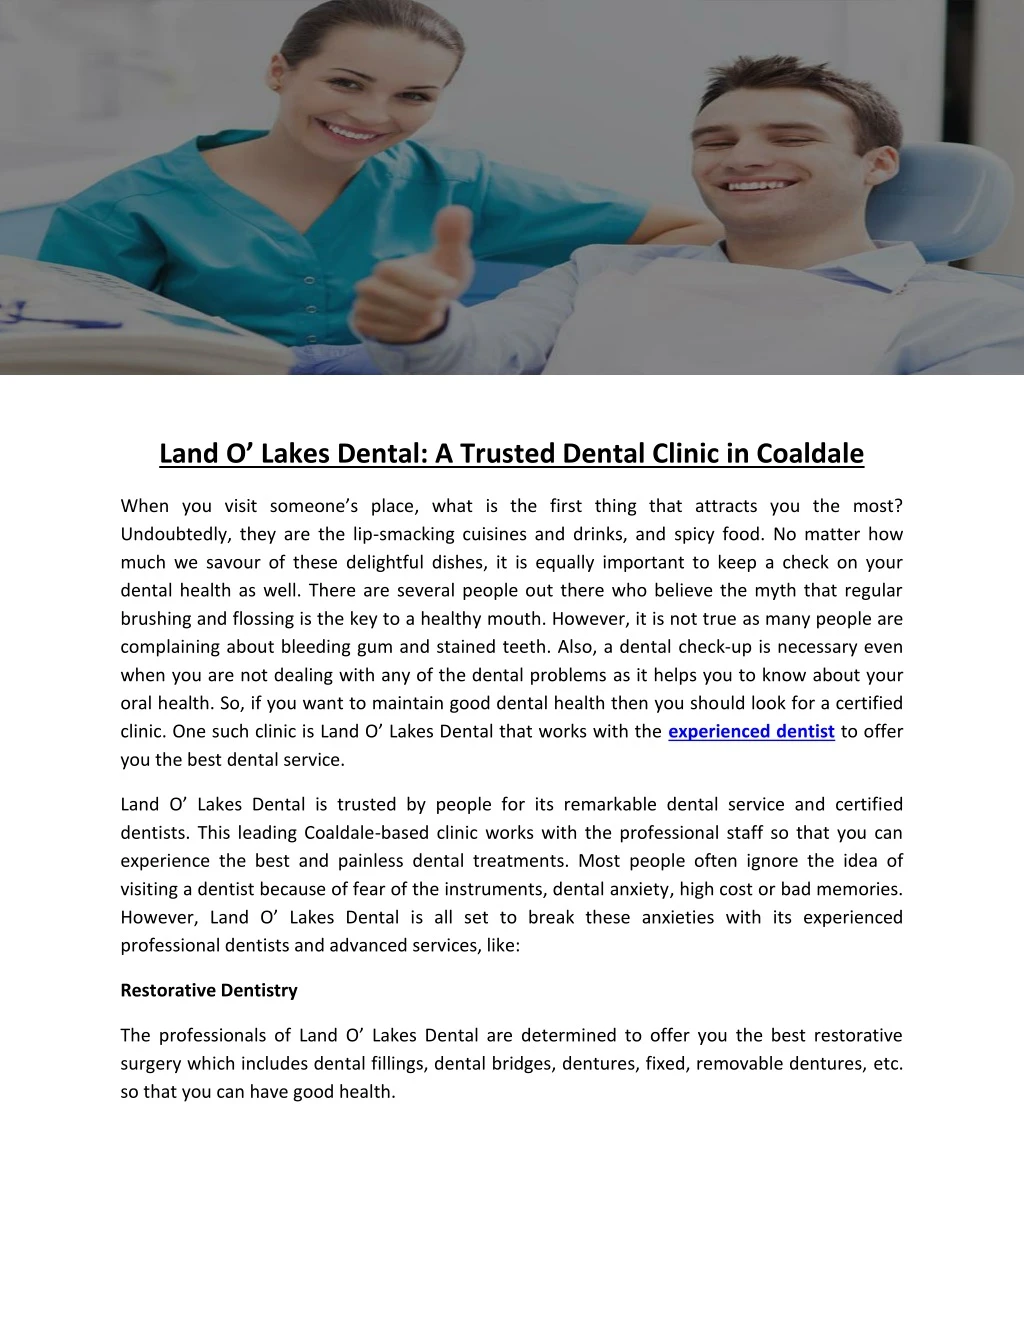 land o lakes dental a trusted dental clinic